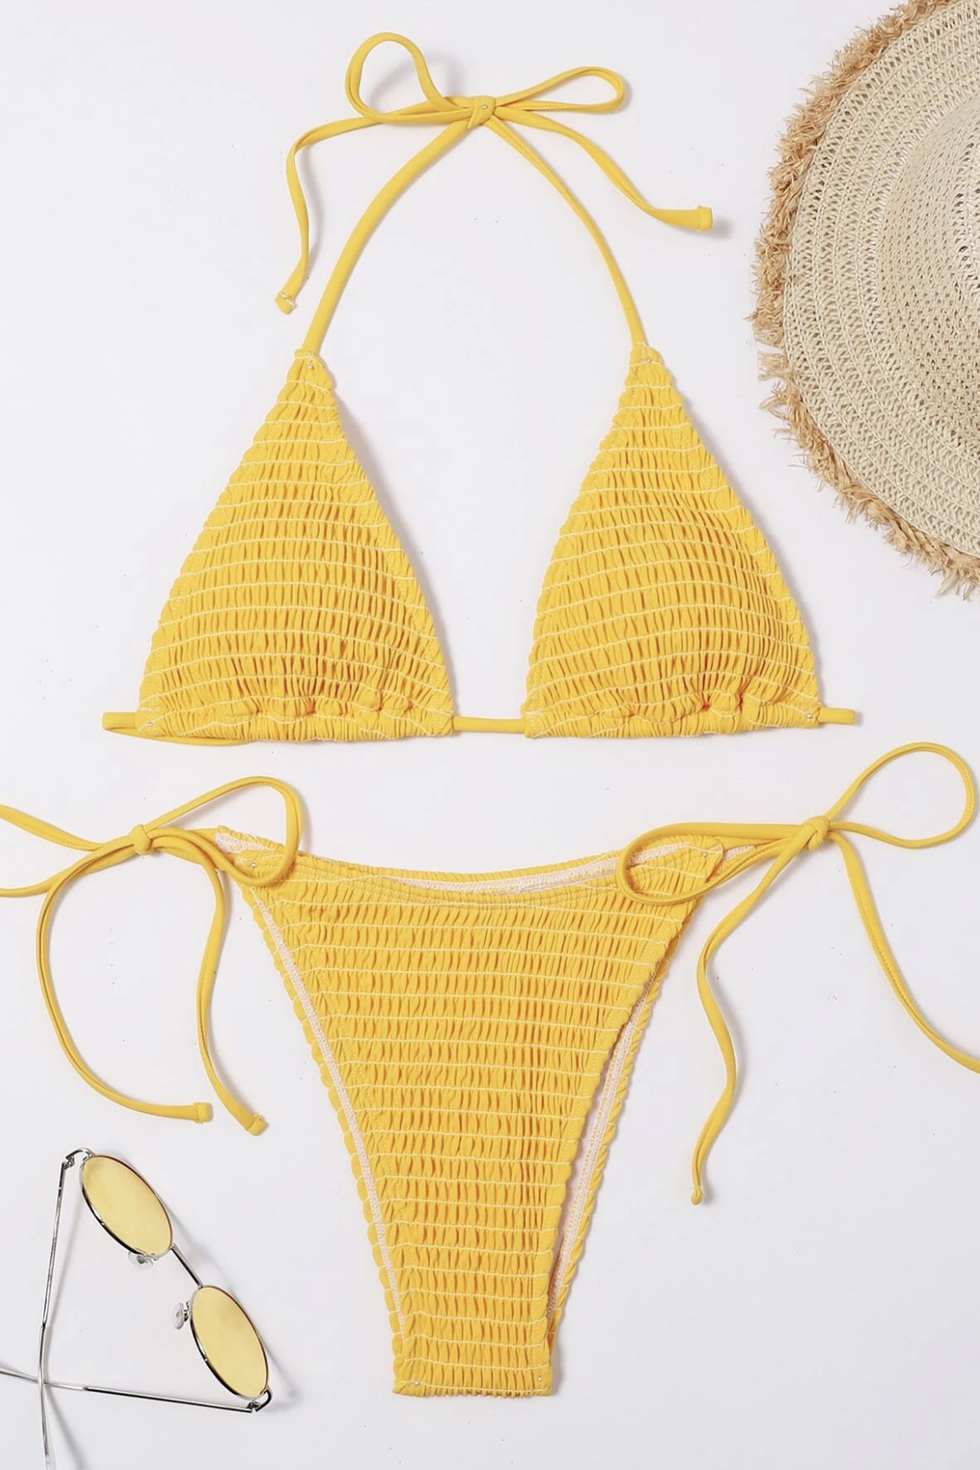 Addison Rae Rocks A Sunny Yellow Keyhole Bikini